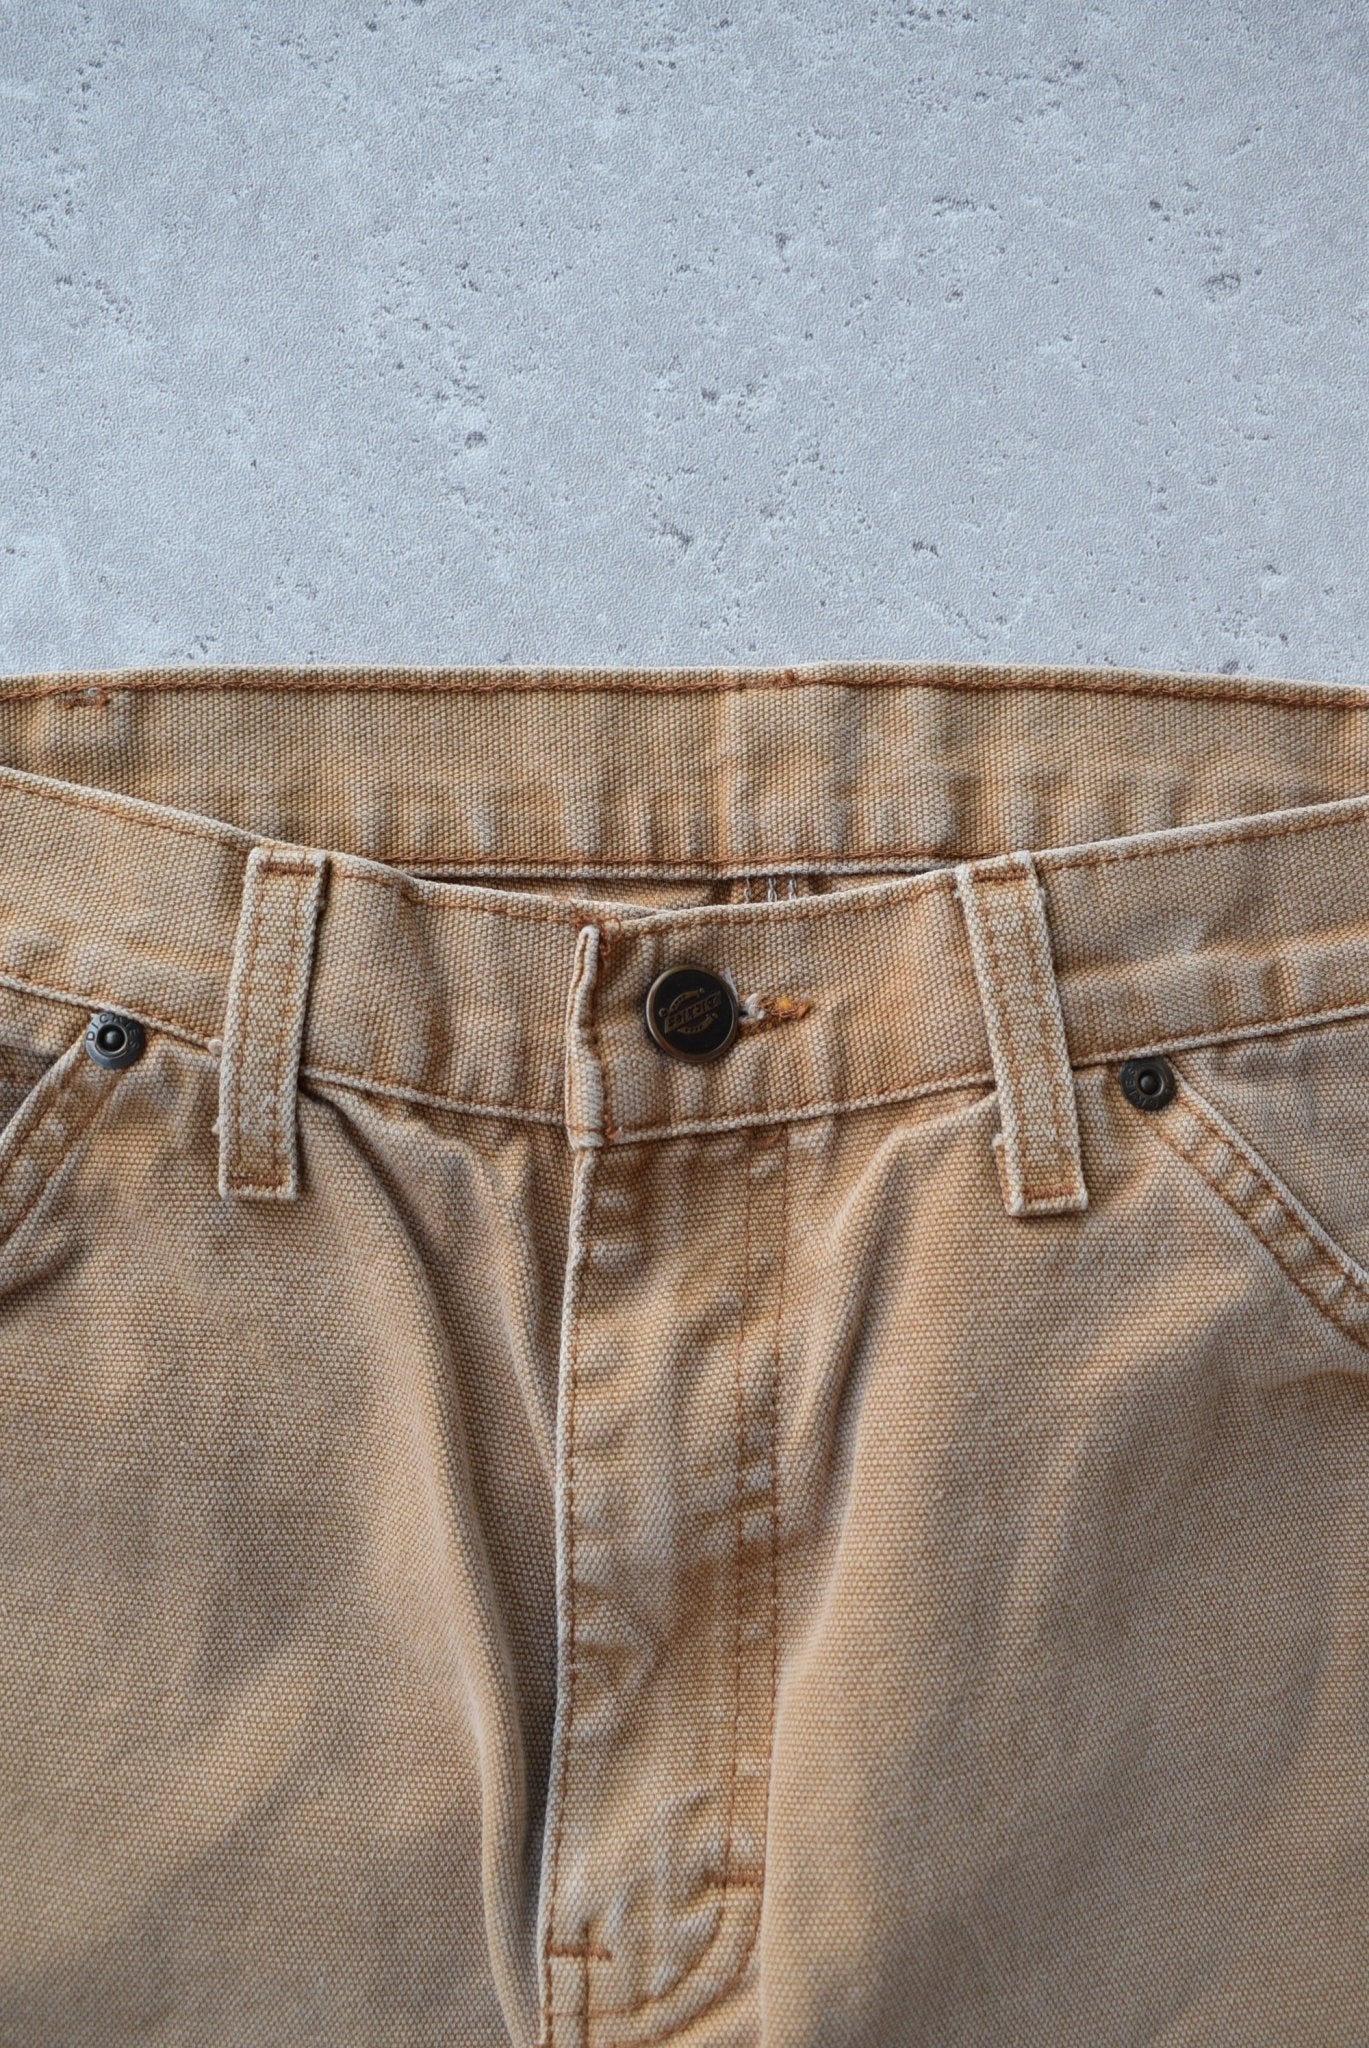 Vintage Dickies Carpenter Pants (W30) - Retrospective Store